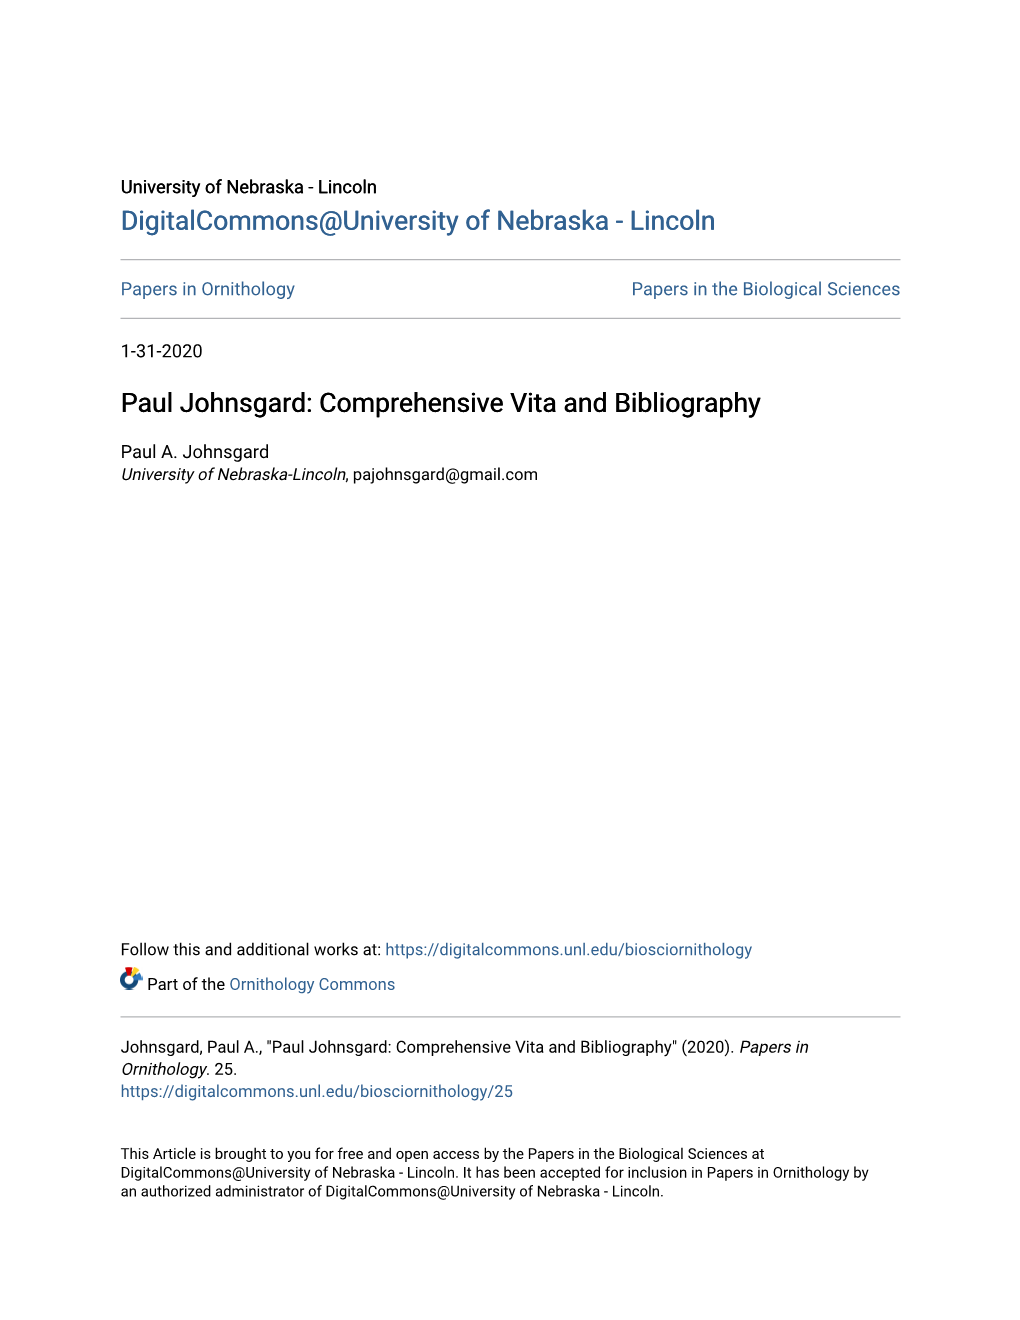 Paul Johnsgard: Comprehensive Vita and Bibliography